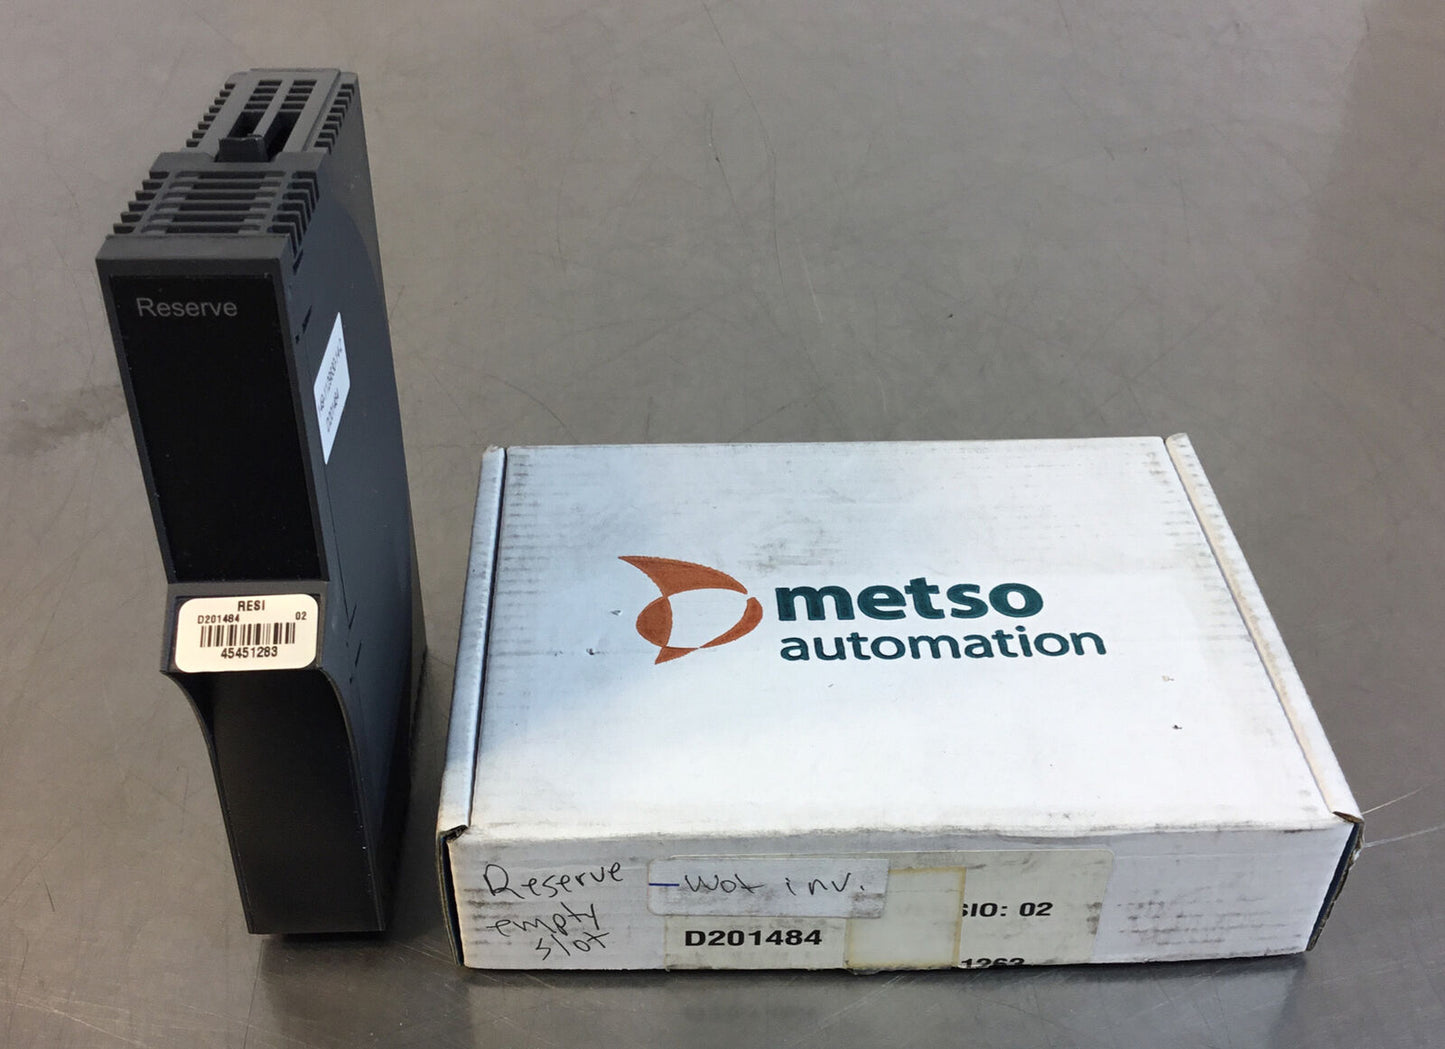 Valmet / Metso Automation  D201484  Reserve  RESI Module 3B-7